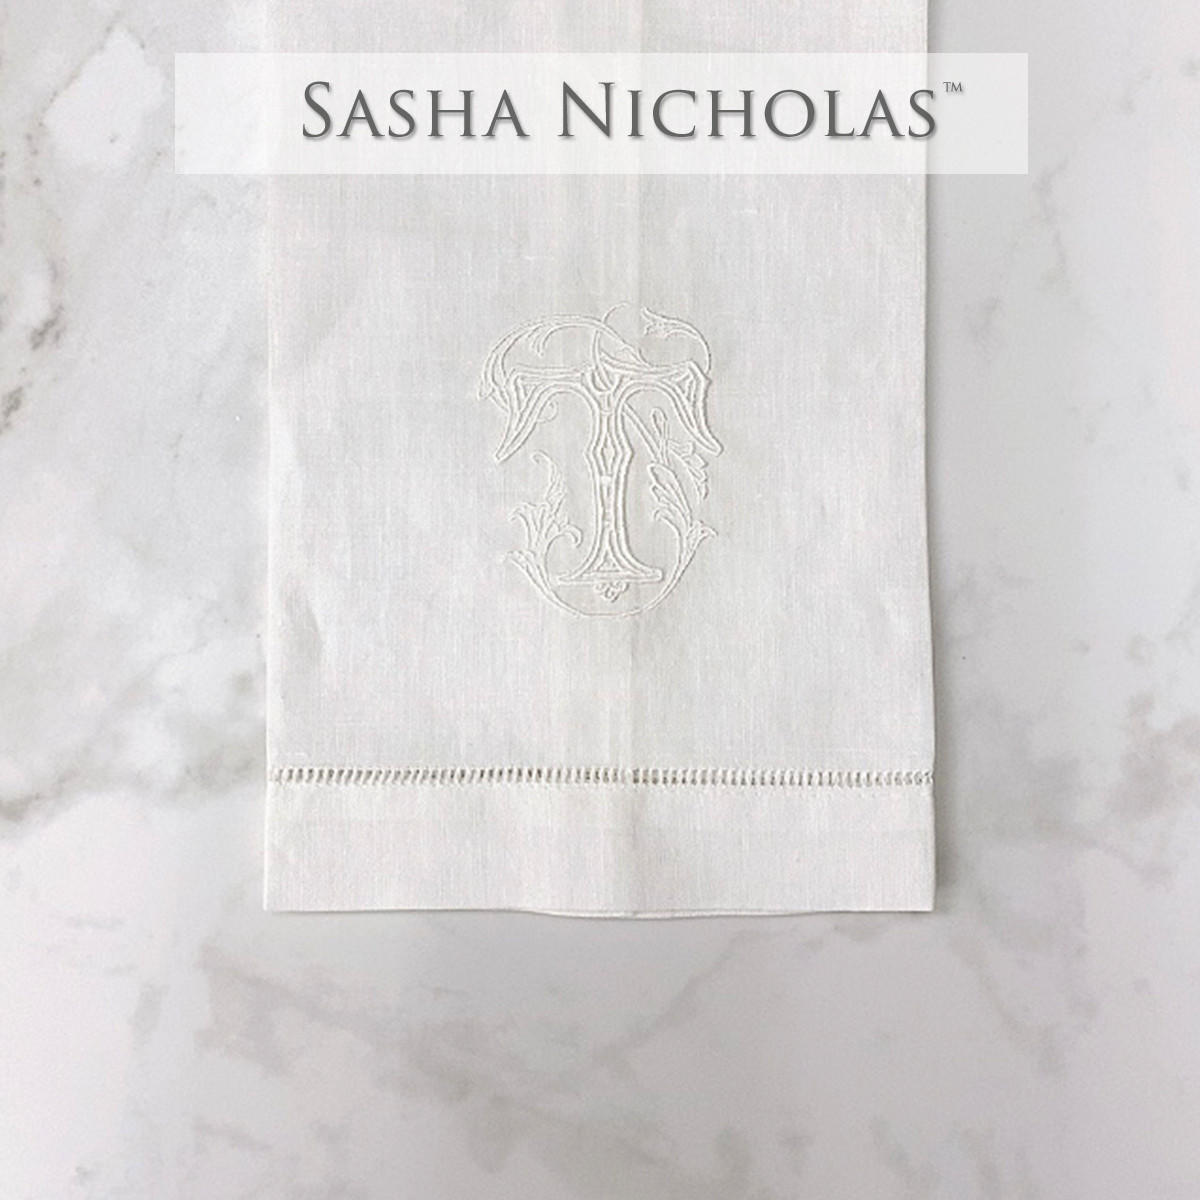 Sasha Nicholas White Linen Hand Towel, Couture Monogram, SNLIN120, Sasha Nicholas